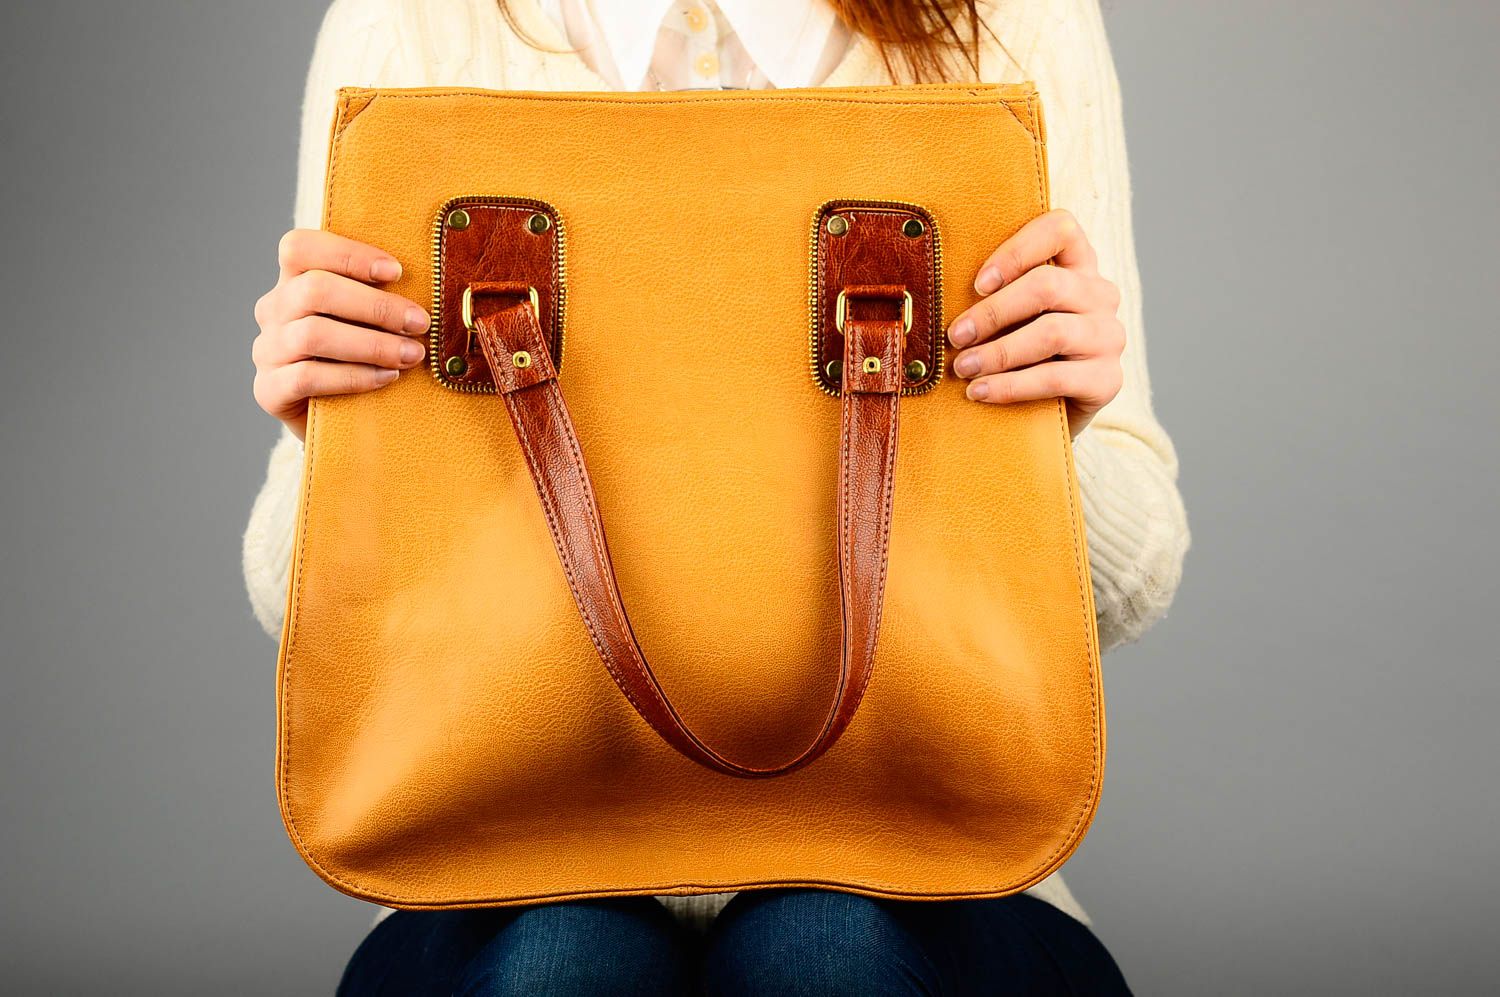 Stylish handmade bag design leather handbag luxury bags for girls gifts for her photo 2